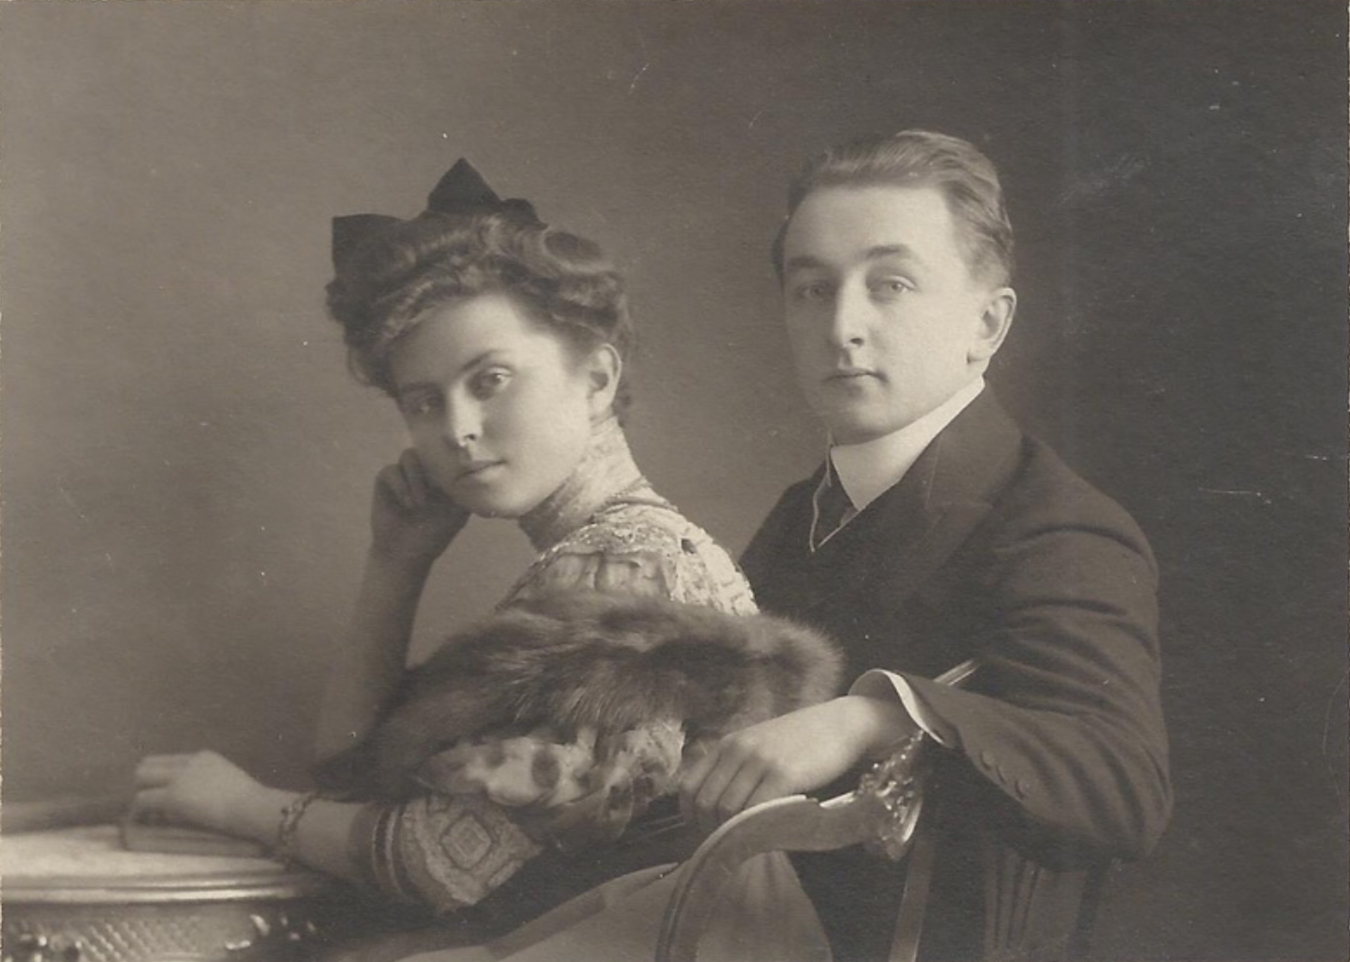 Thomas and Olga de Hartmann, wedding picture 1906